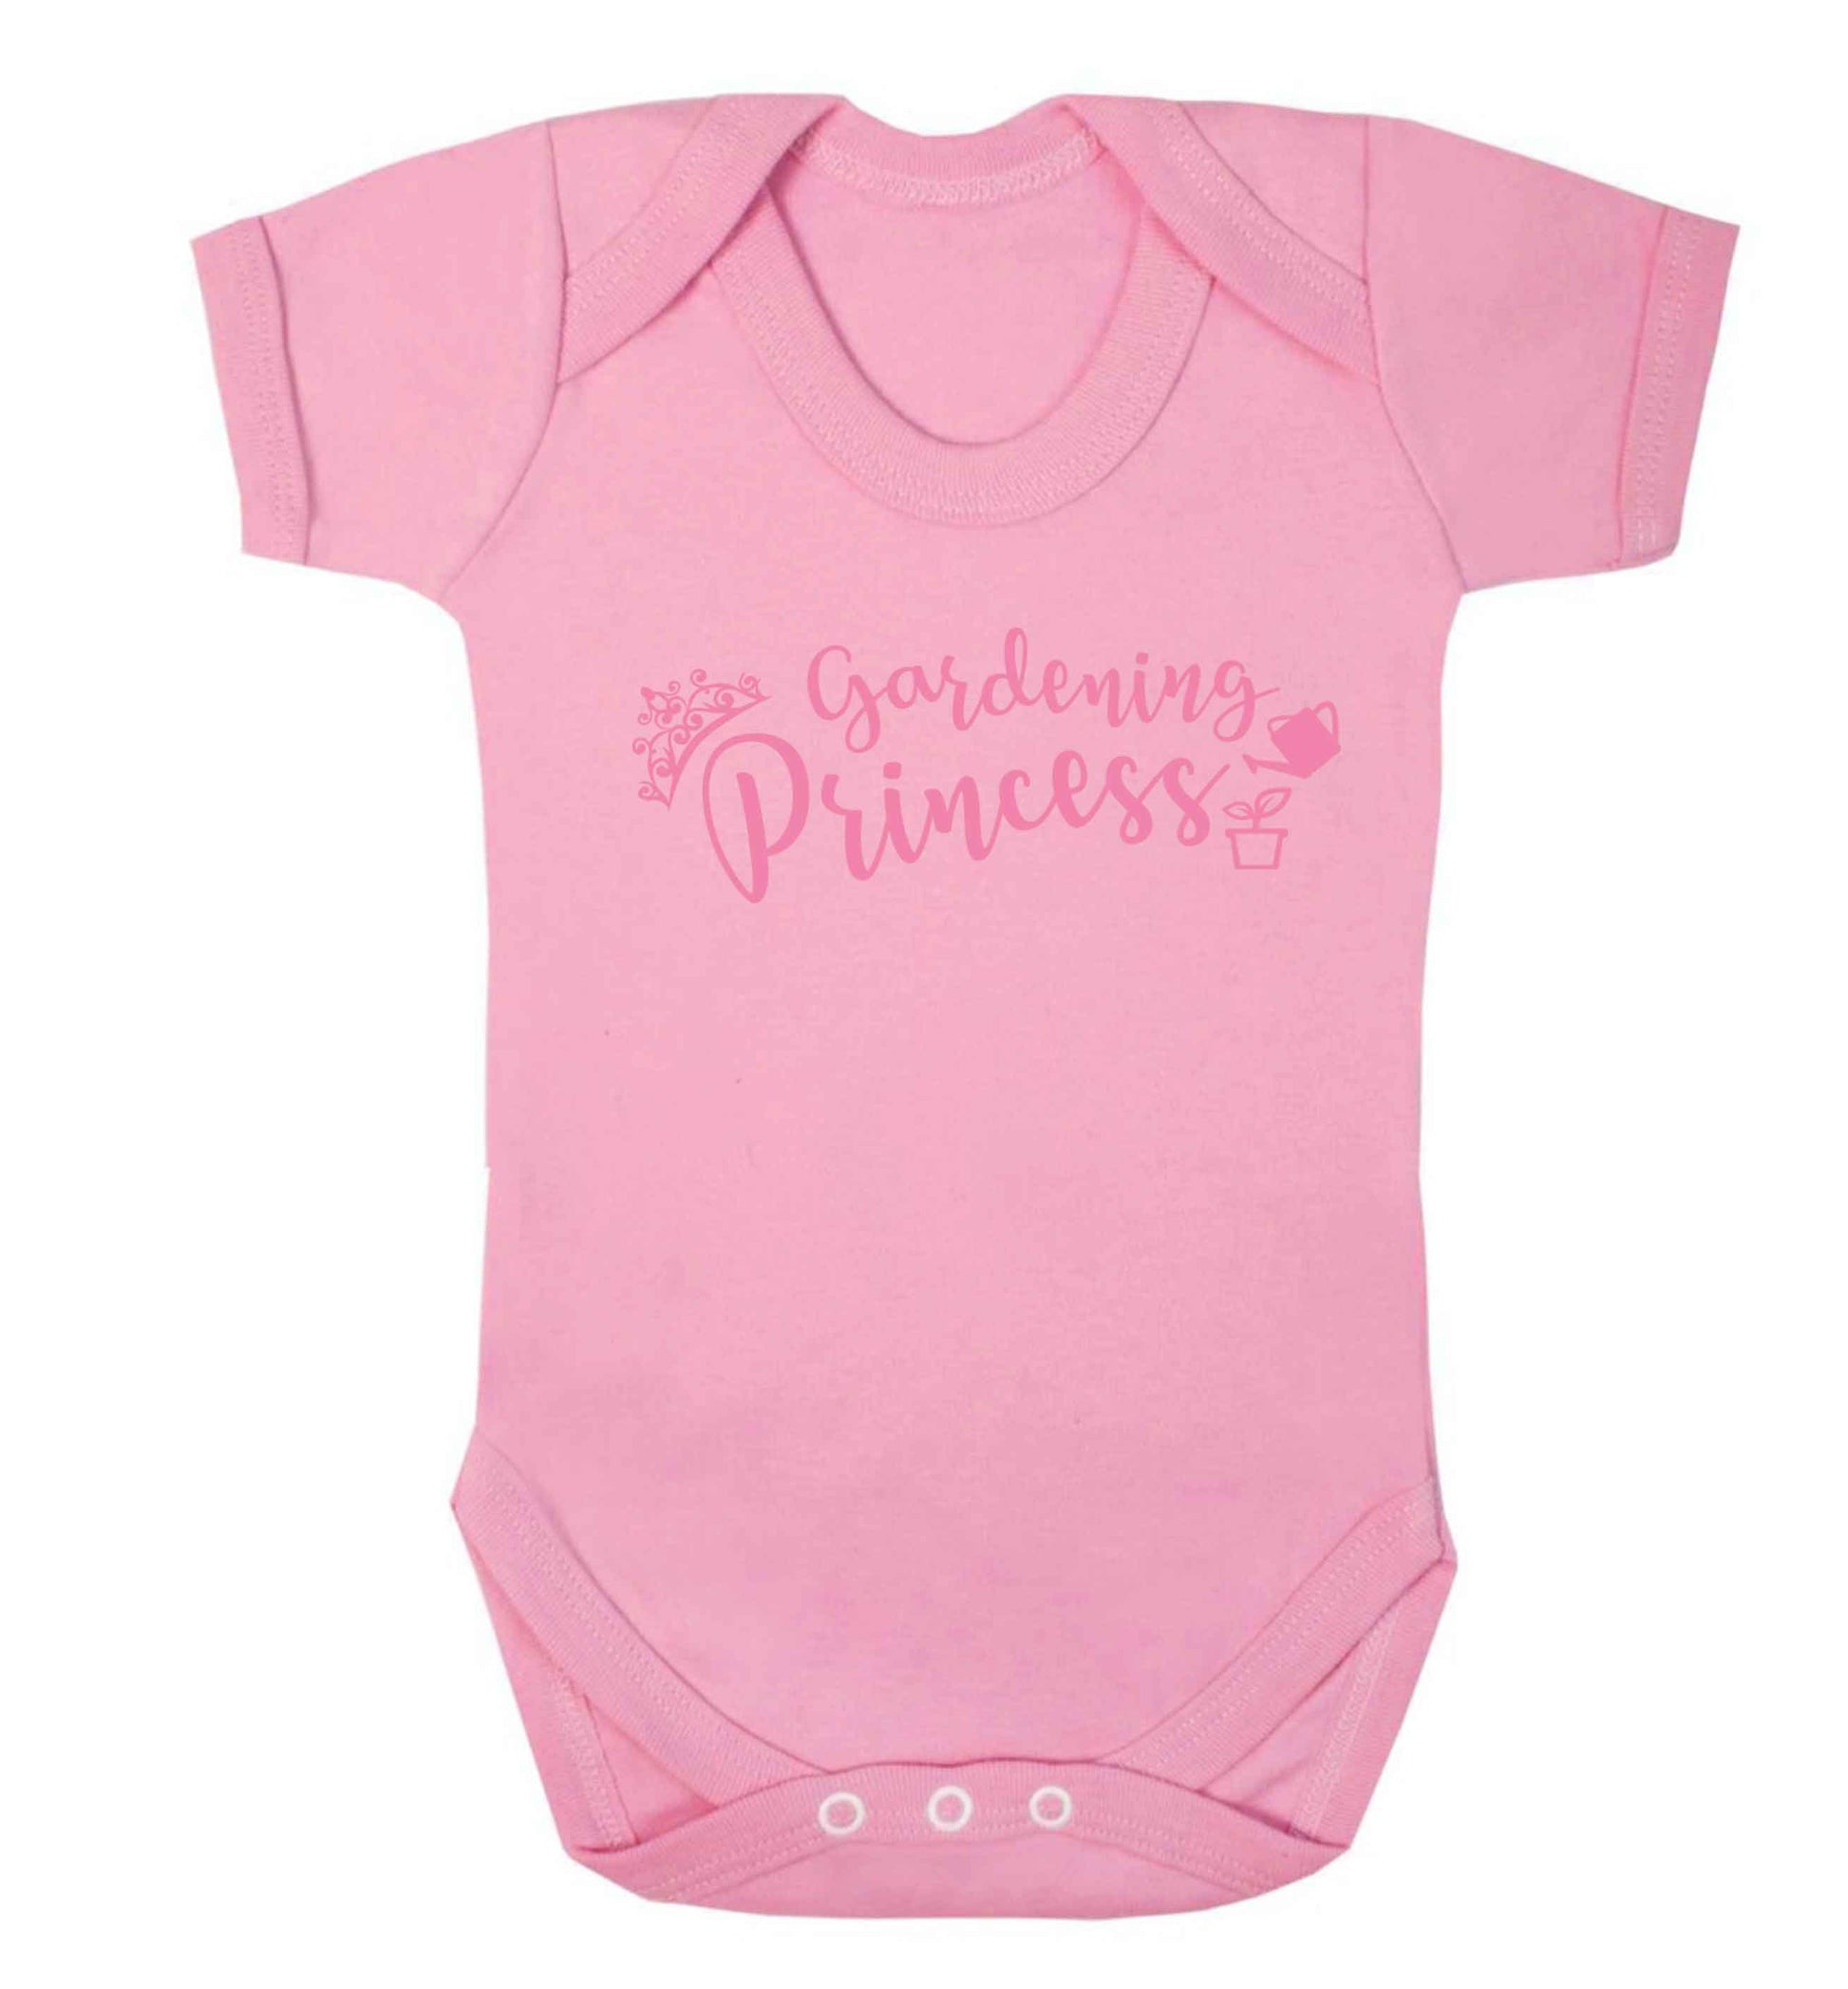 Gardening princess Baby Vest pale pink 18-24 months